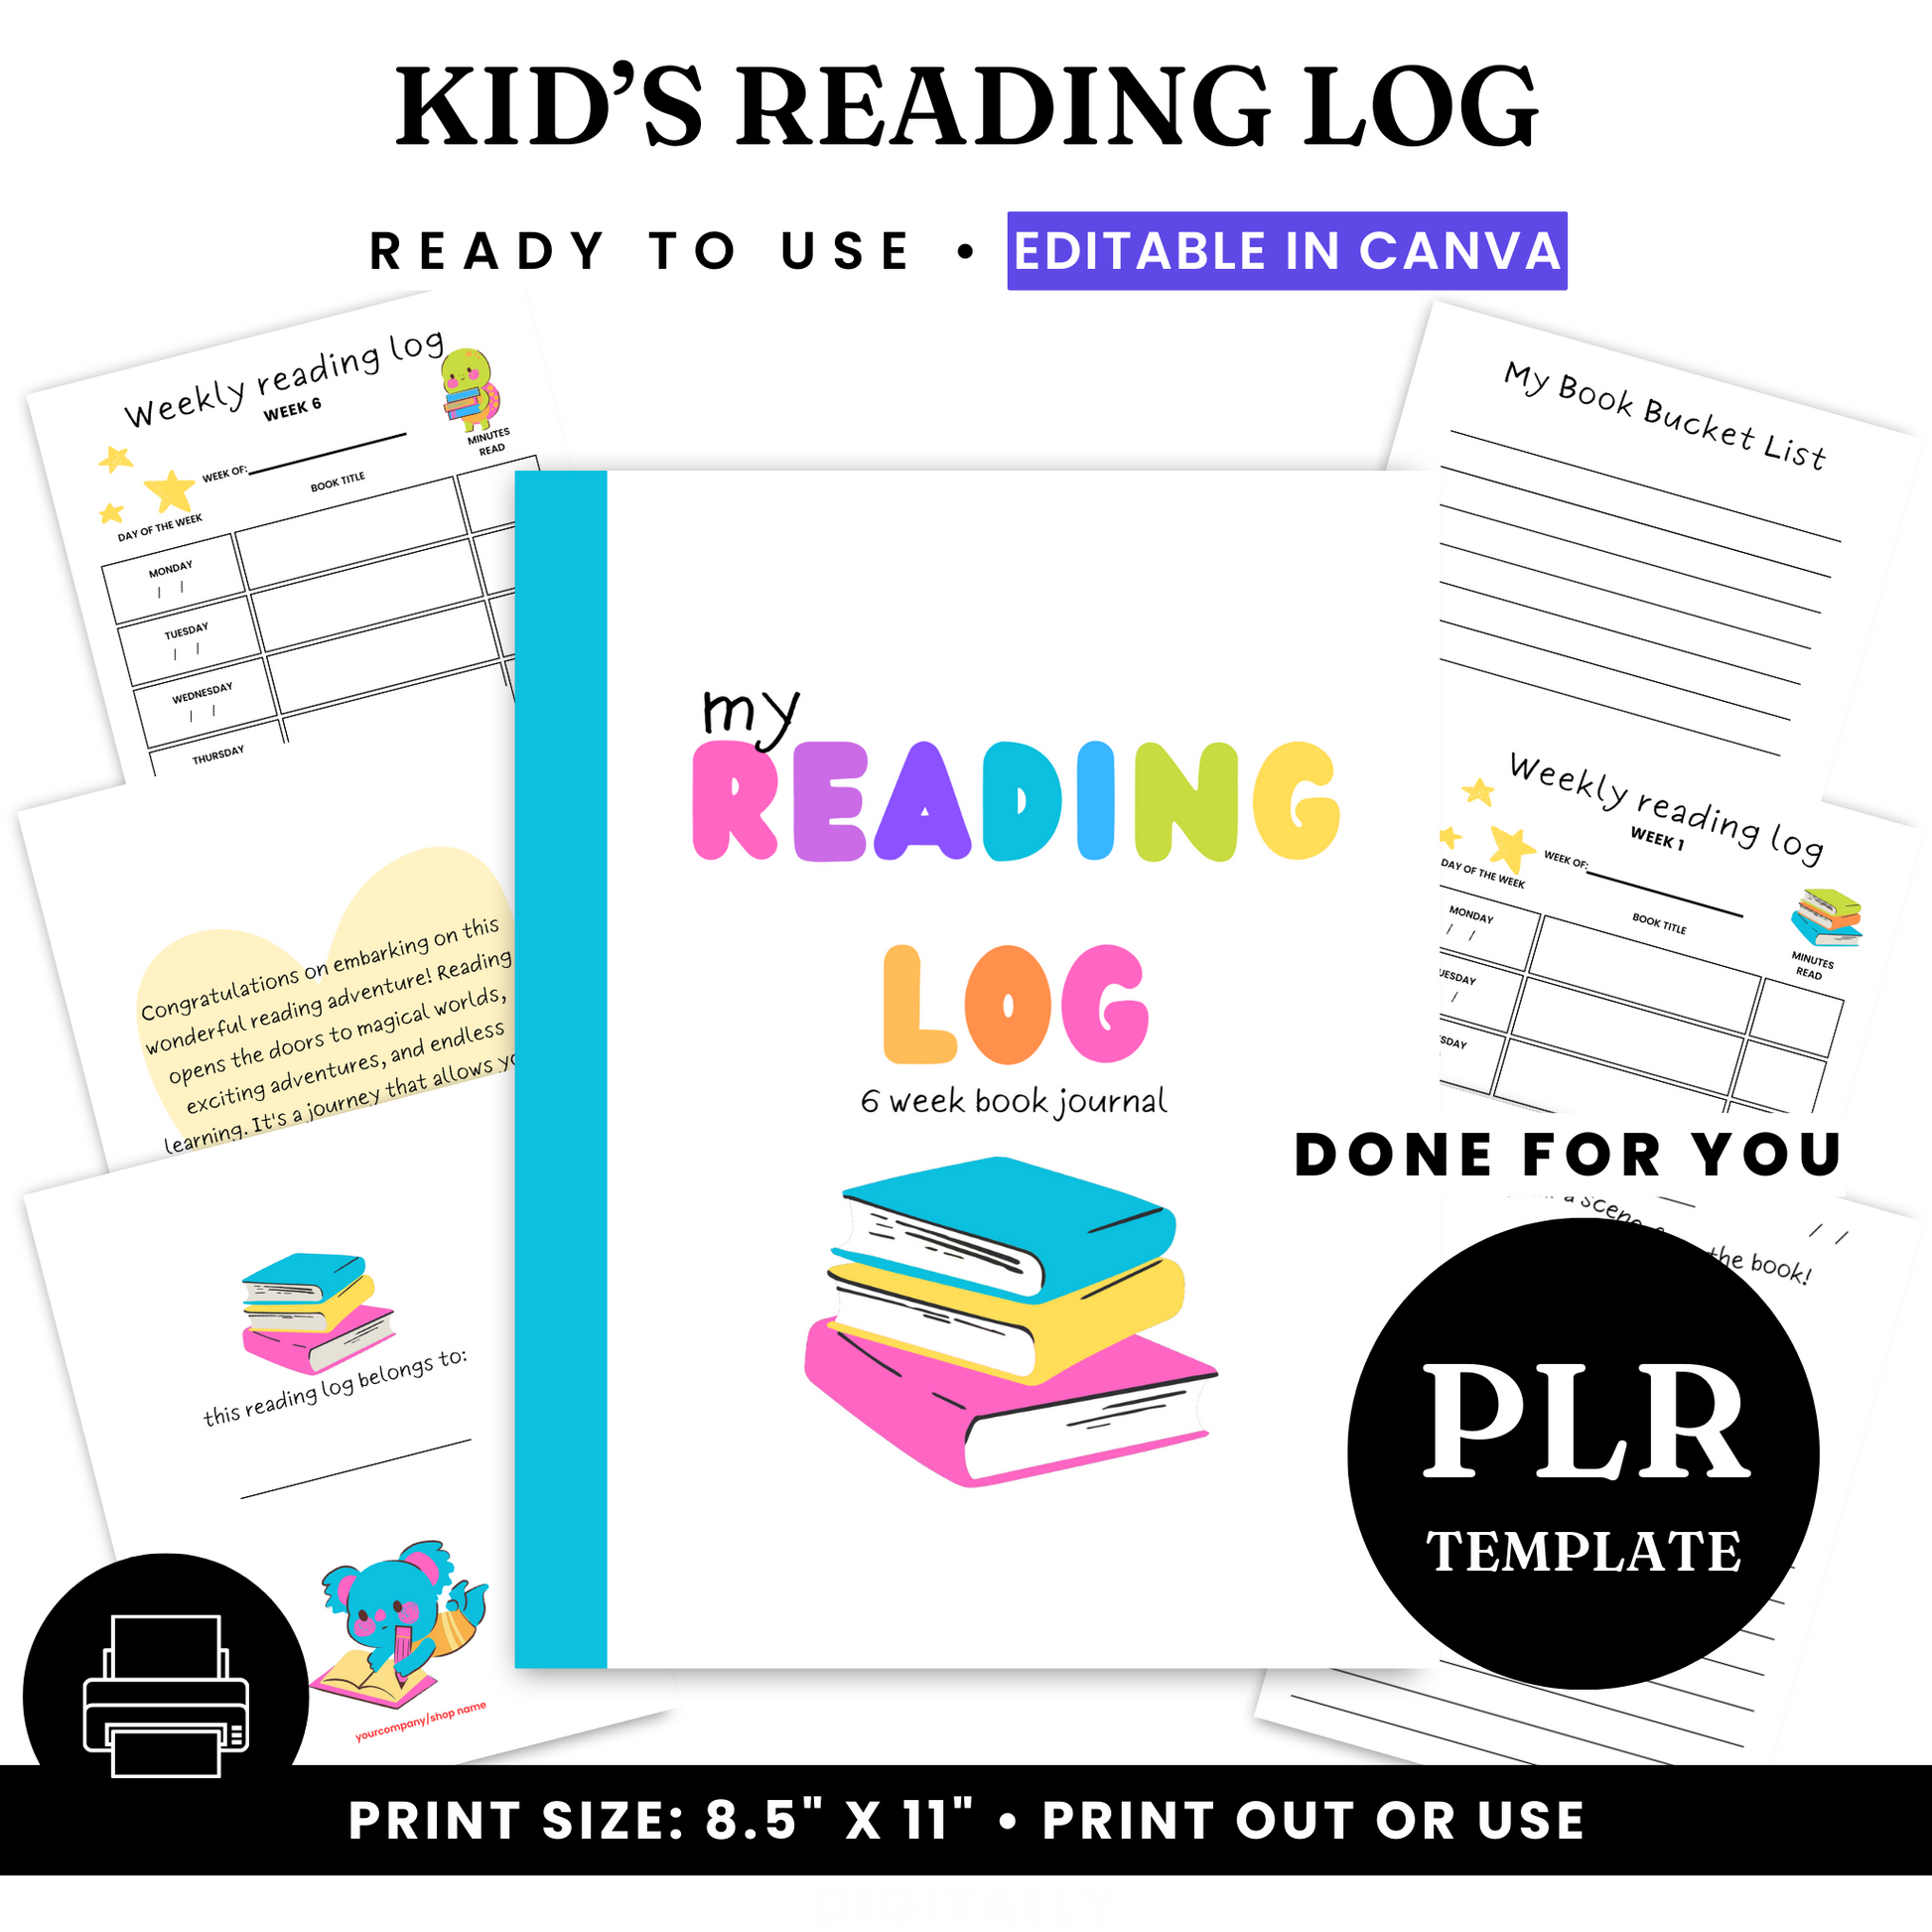 Read PLR Printable Coloring Bookmark Designs